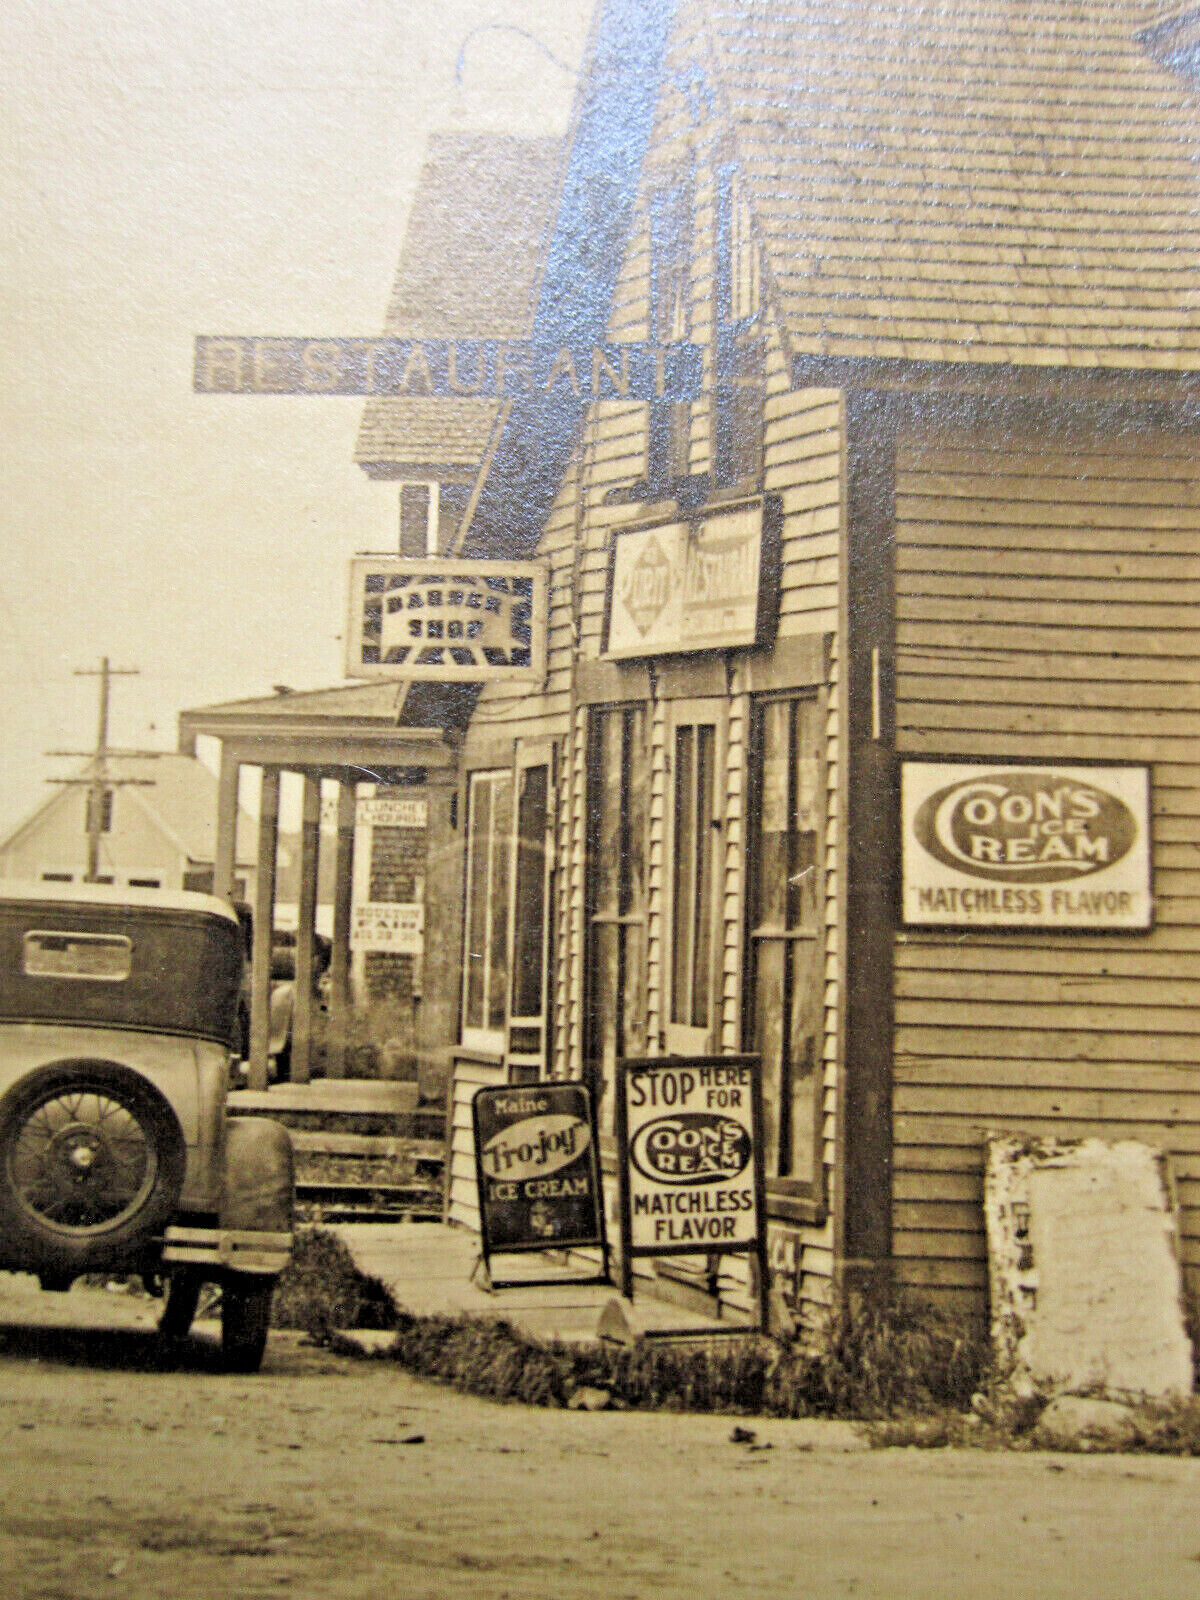 vTg 1928 Main St Coon\'s Ice Cream x2 & Fro Joy Advertising Signs RPPC PostCard 